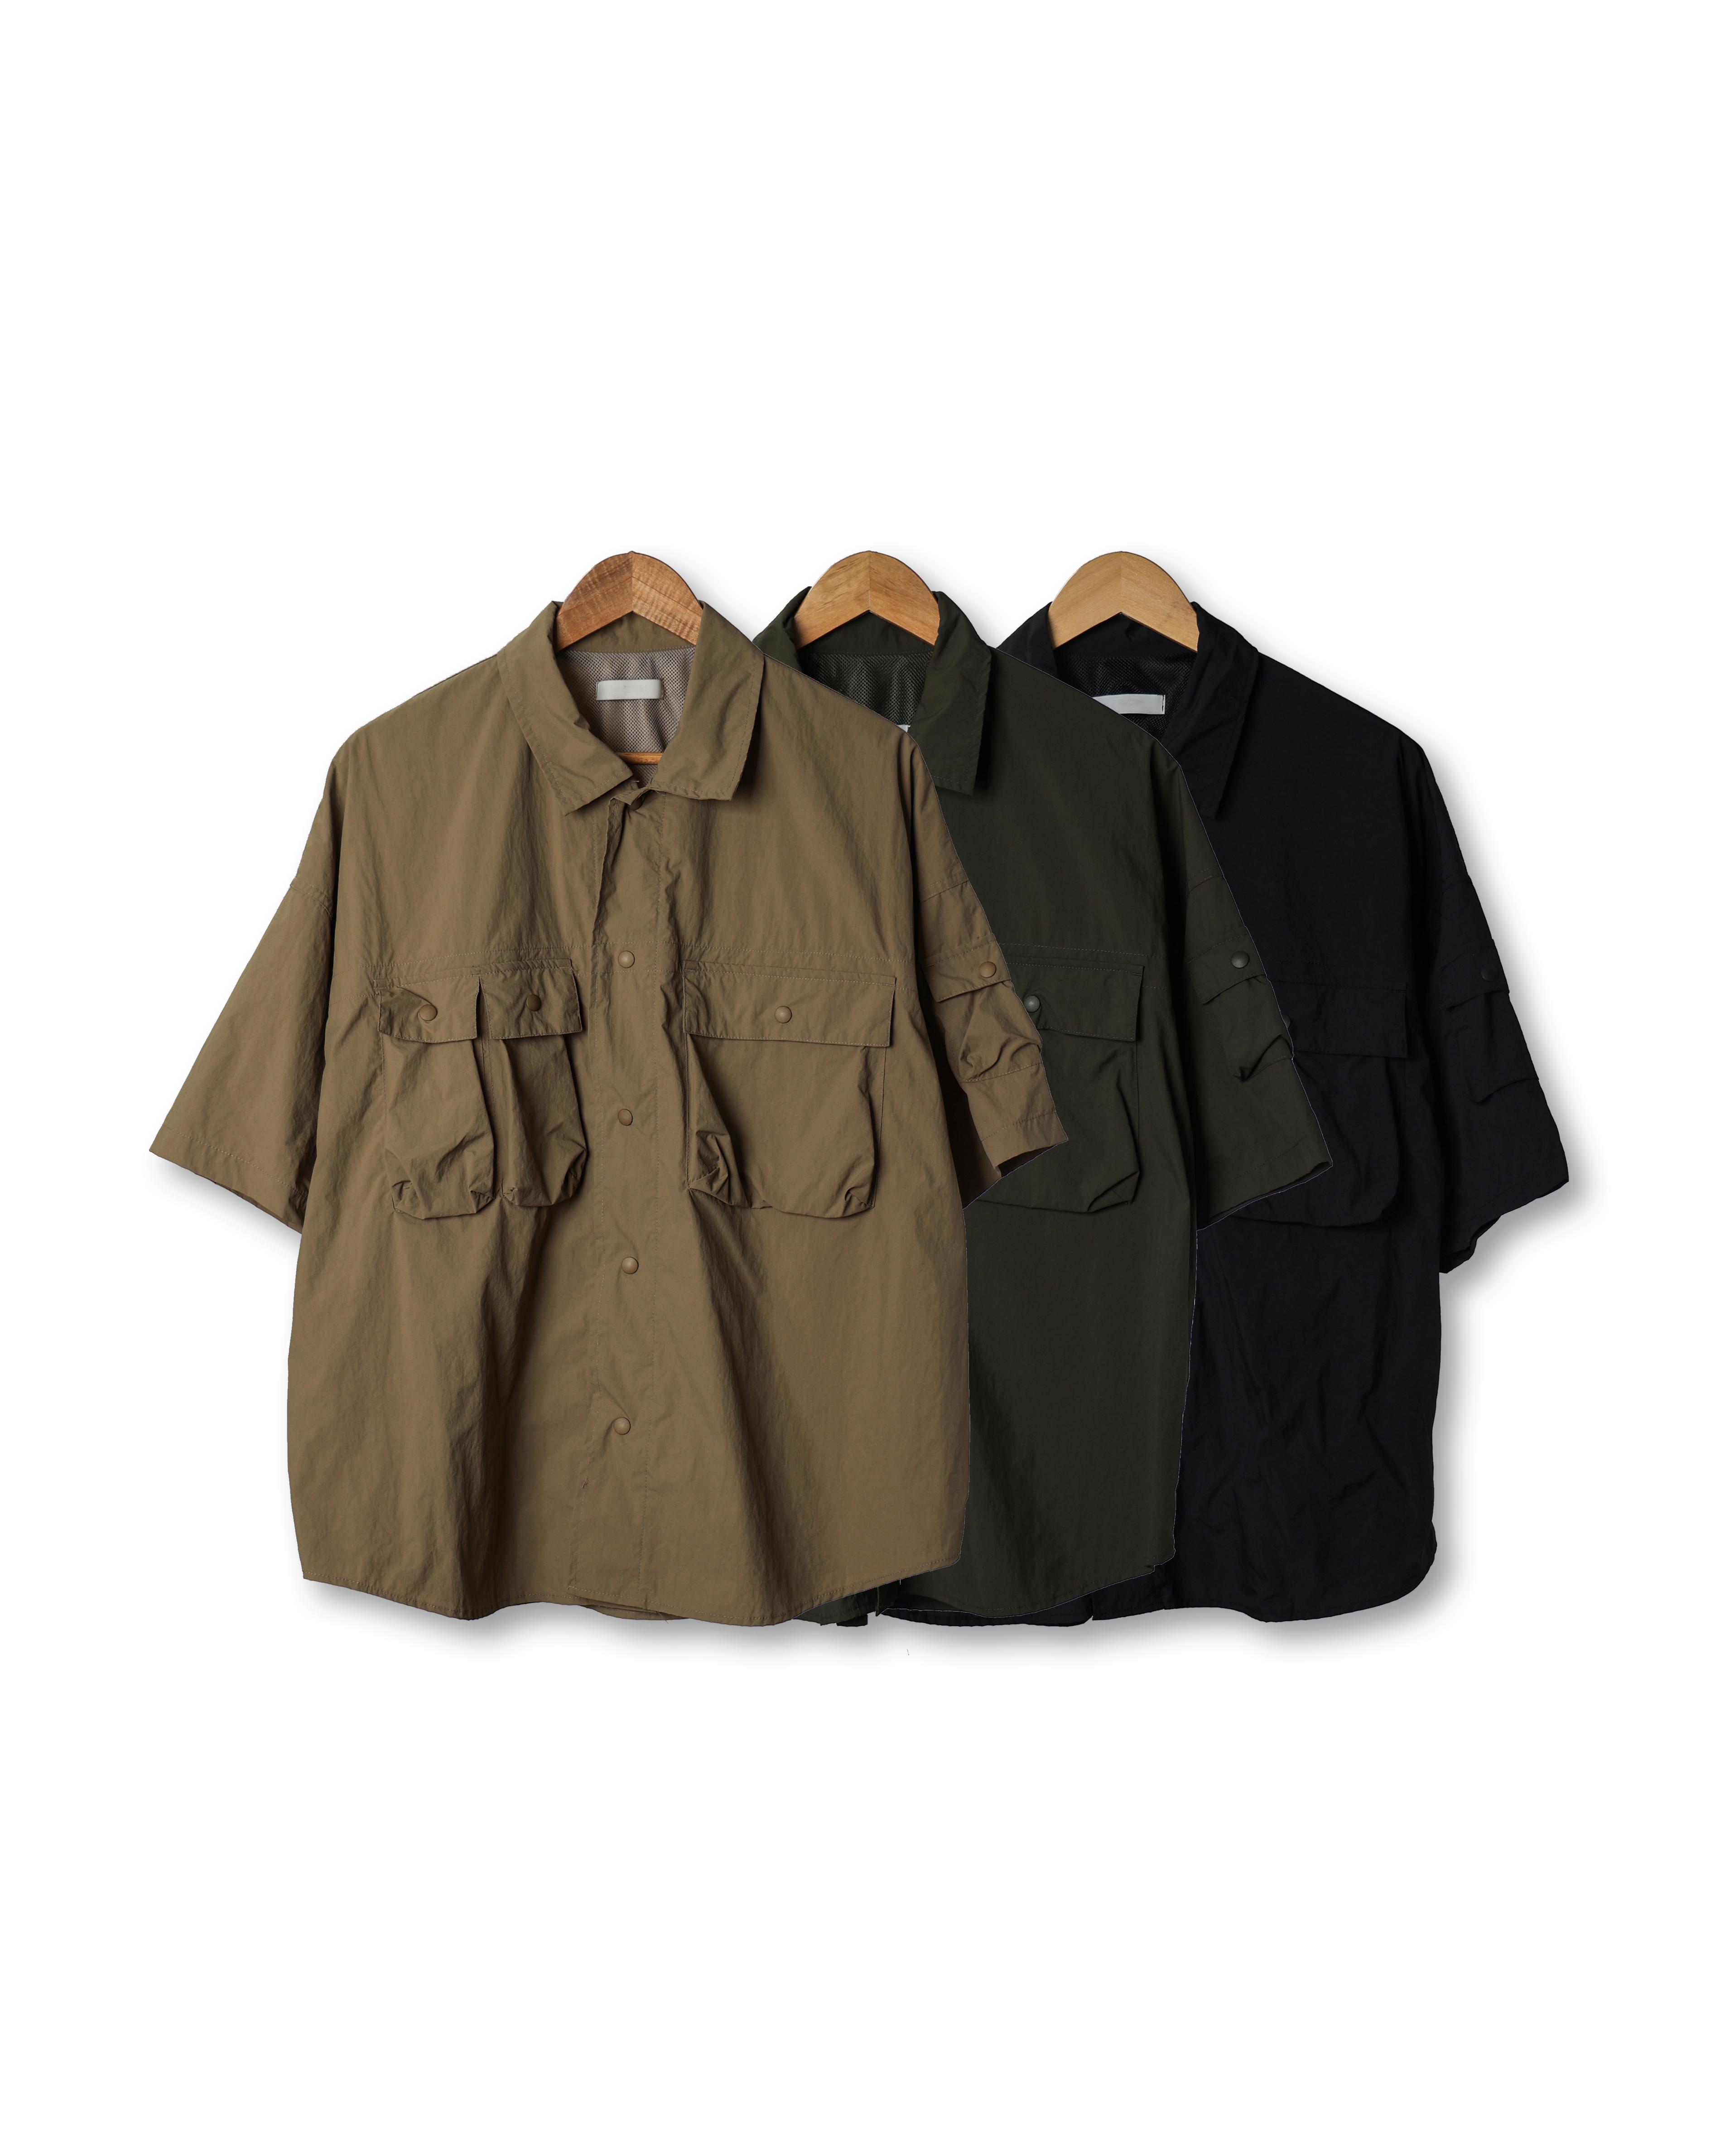 SPETO Military Utill Pocket Half Shirts (Black/Olive/Beige)